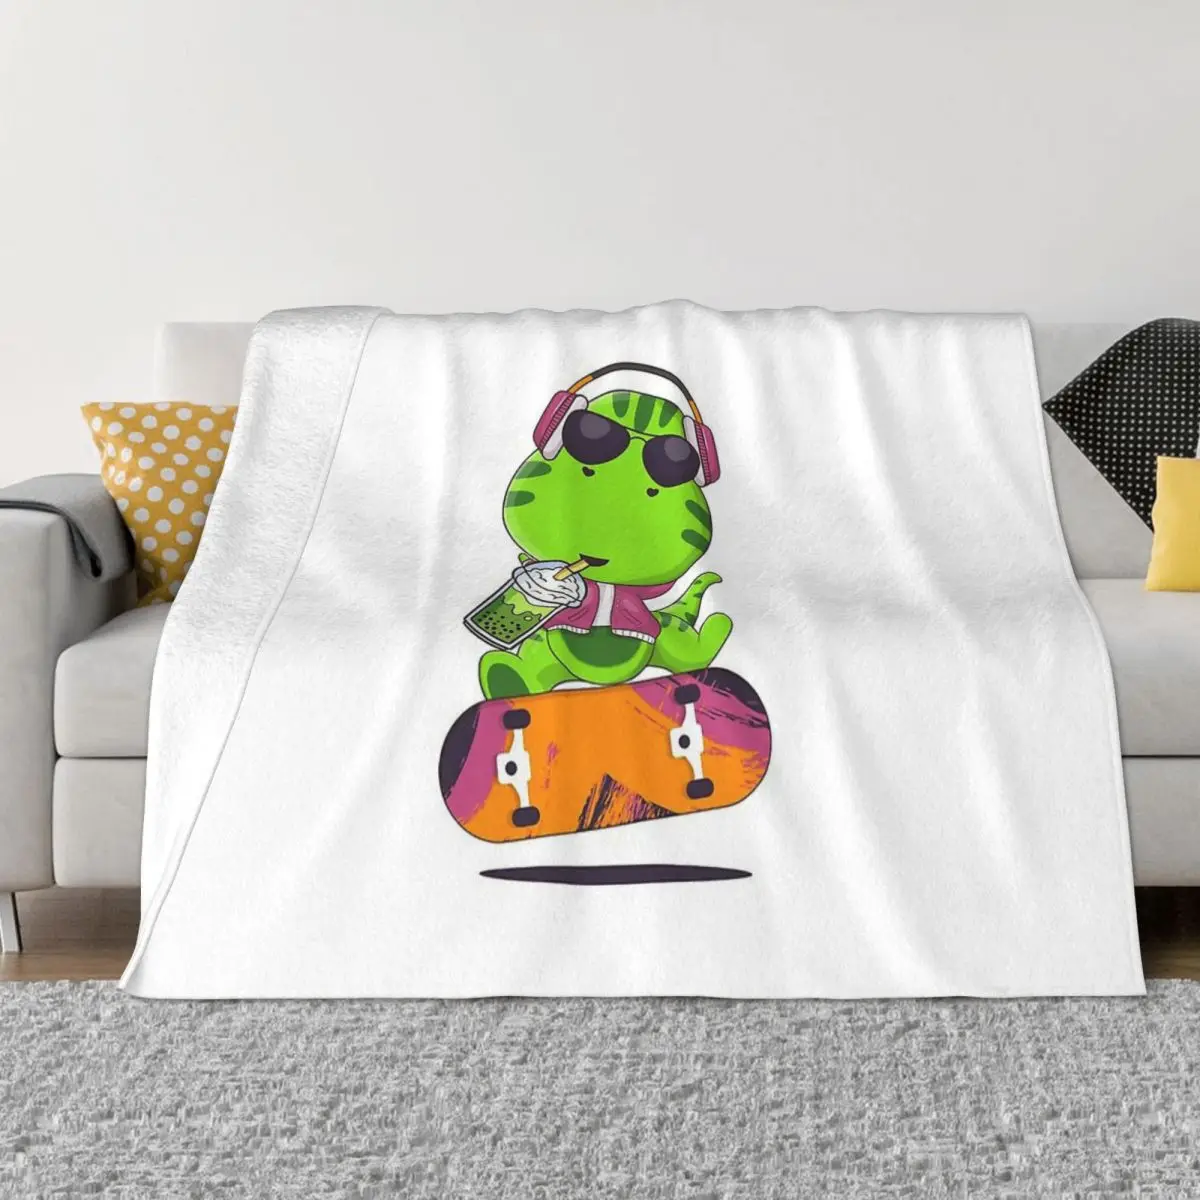 

Readosaurus Oak Lizard Blanket Flannel Decoration The Cool Dino Portable Home Bedspread